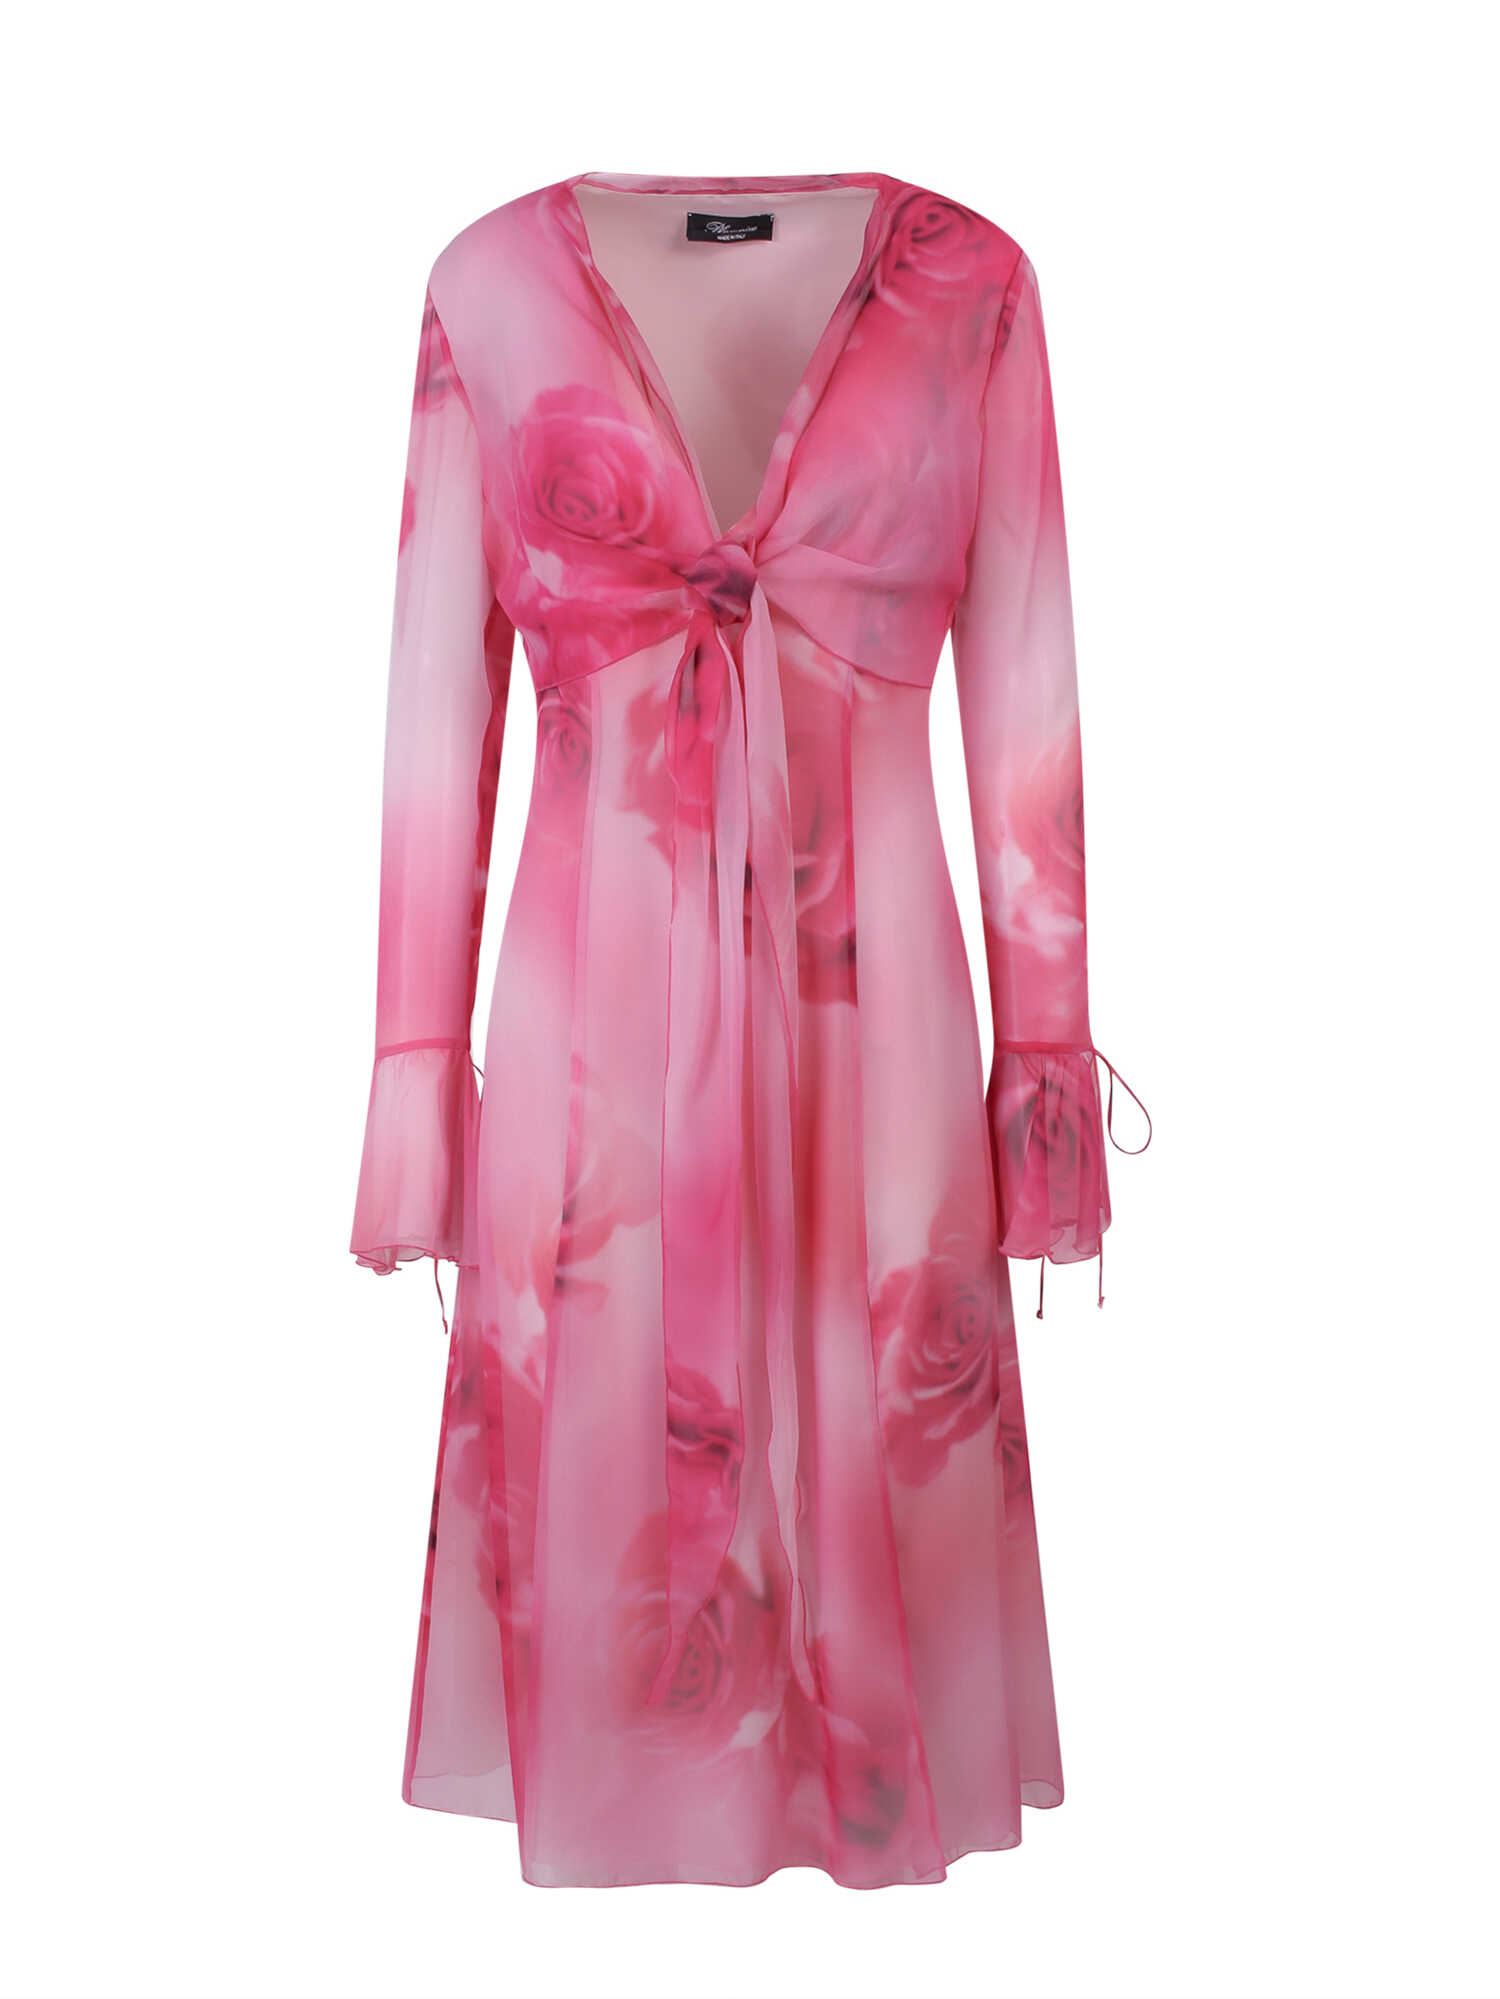 Blumarine Dress Pink image0